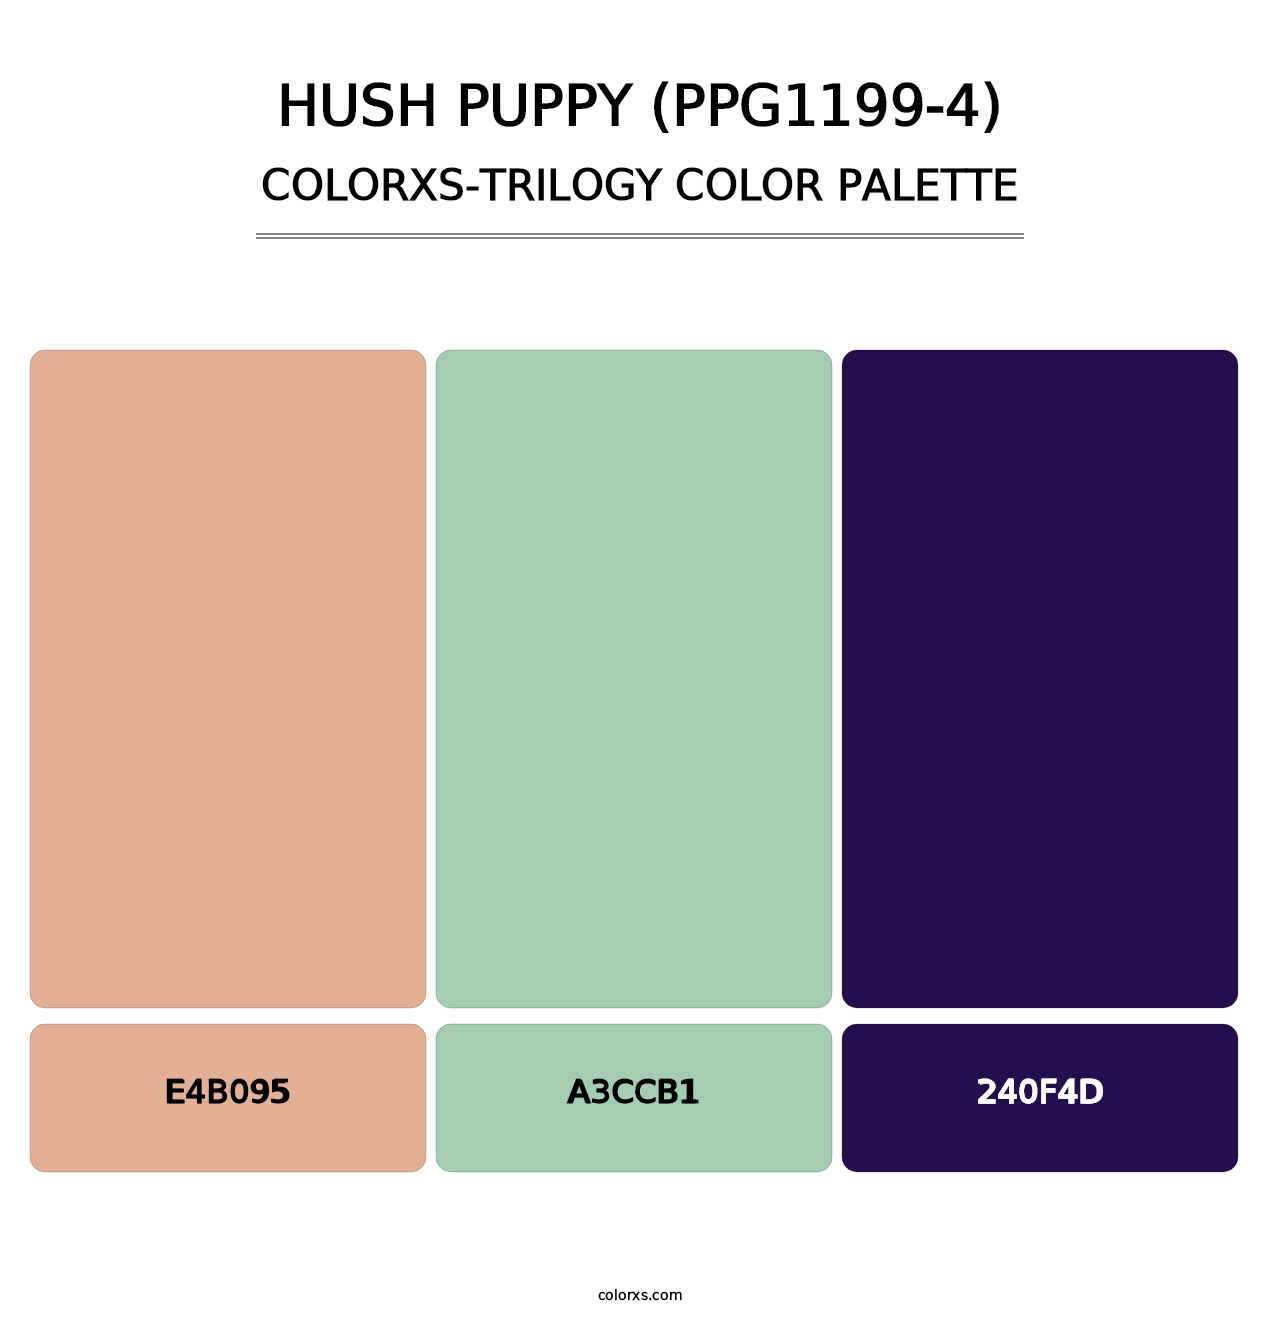 Hush Puppy (PPG1199-4) - Colorxs Trilogy Palette